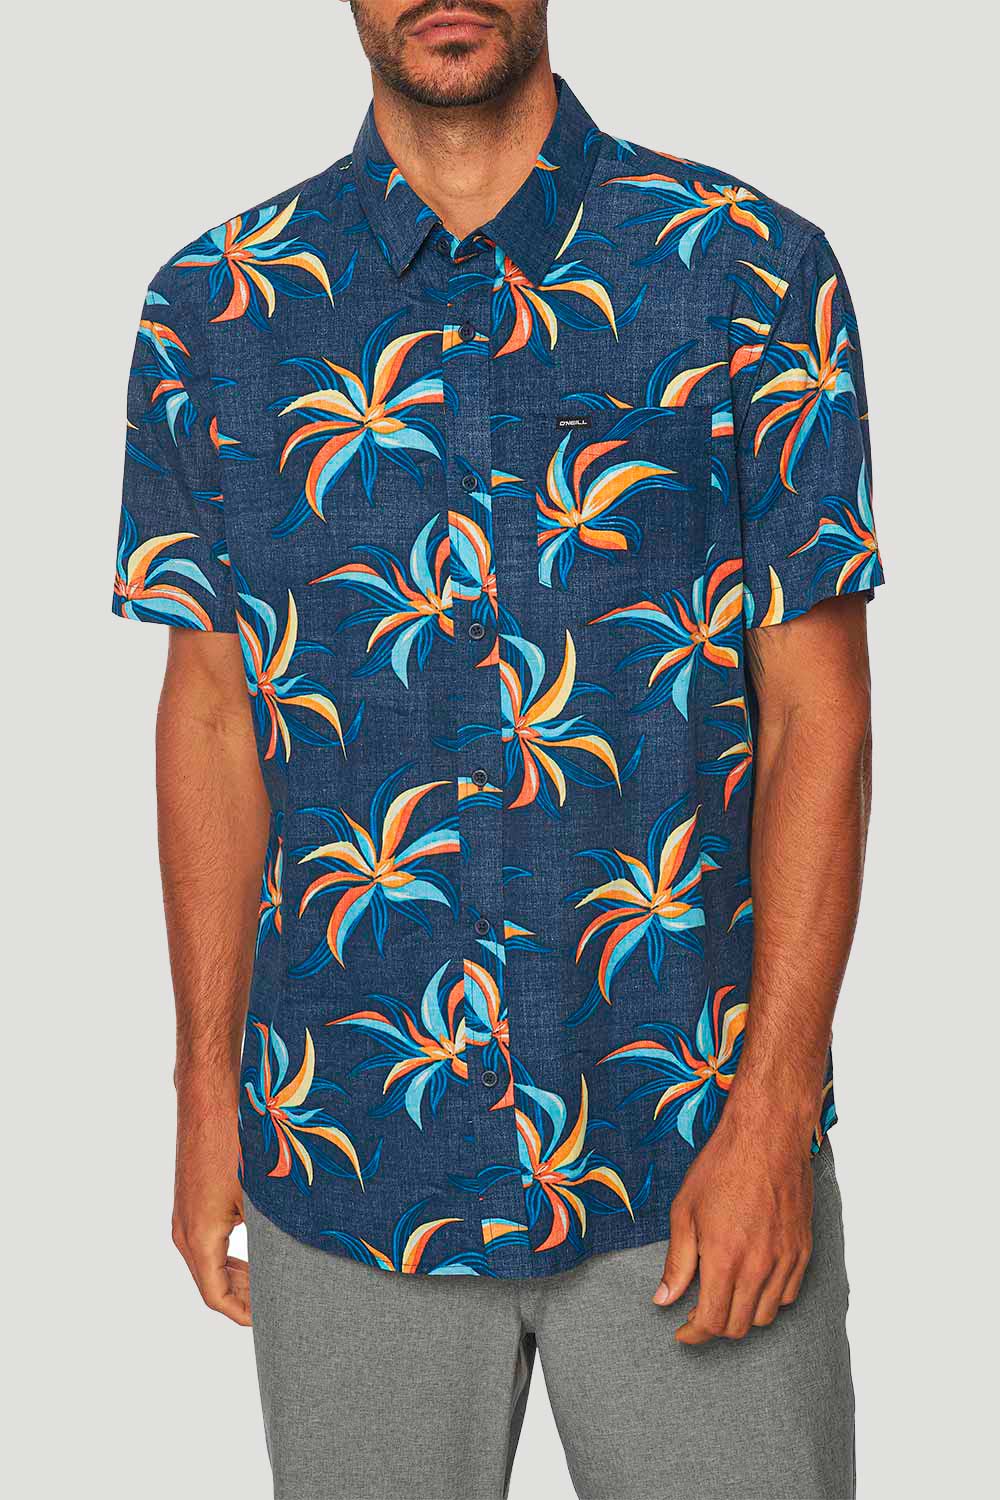 Compra ahora camisas para playa Grove Flow para hombre - O'Neill Colombia